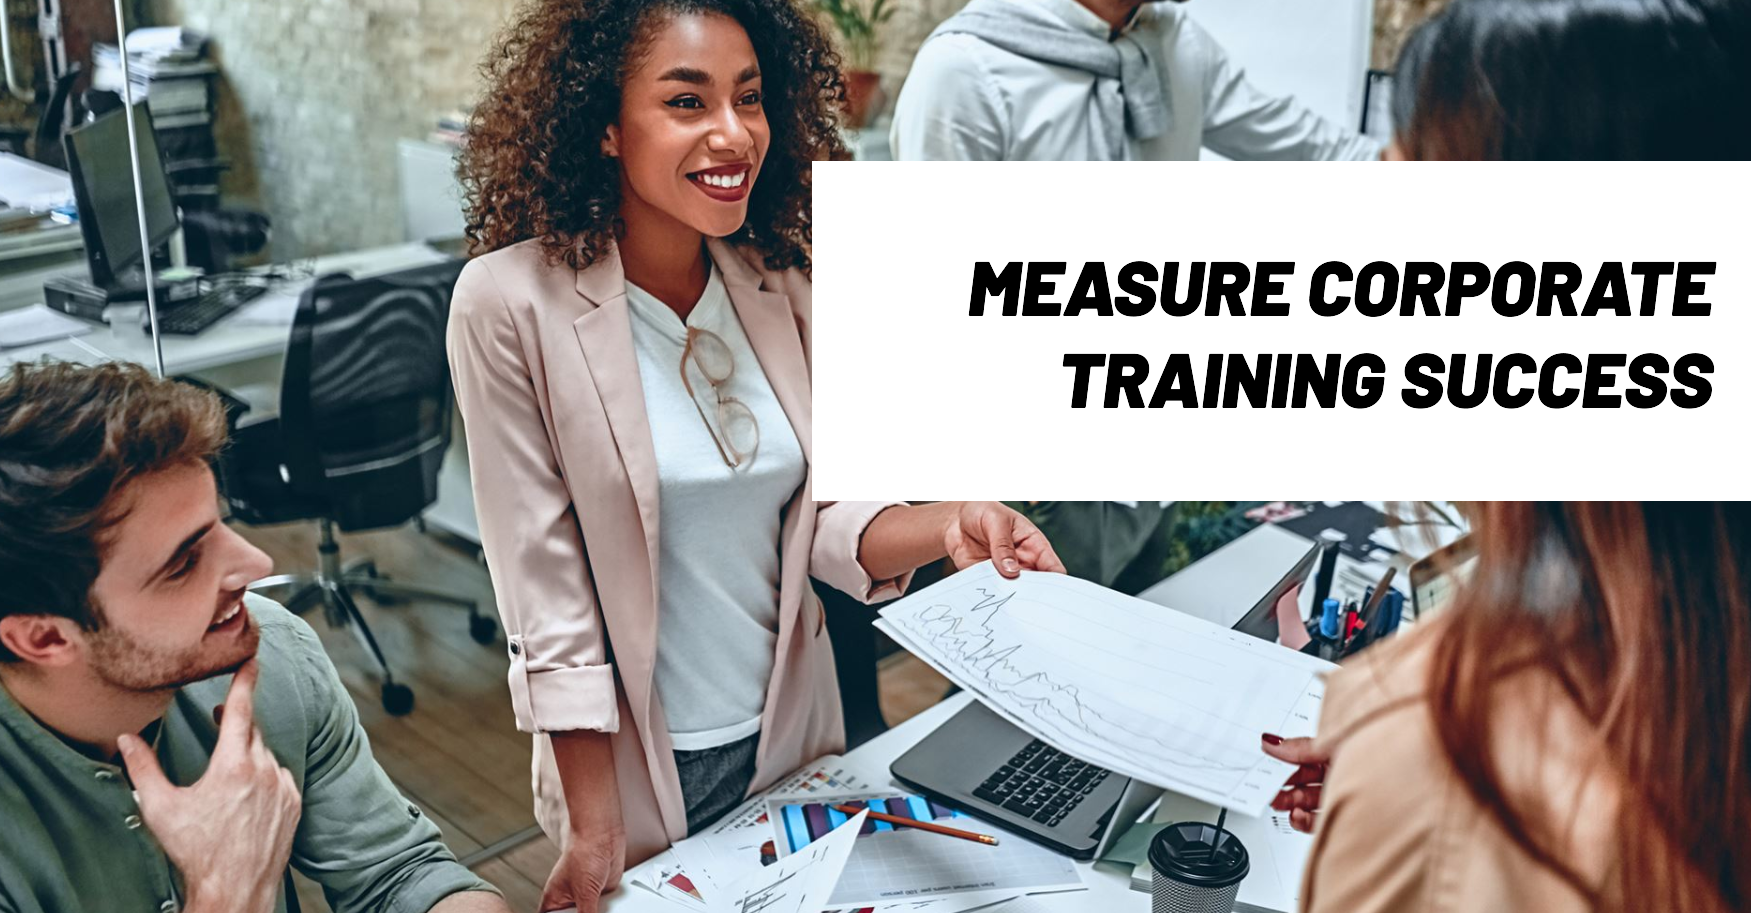 7 ways to measure Corporate Training Success: Employee Engagement Metrics